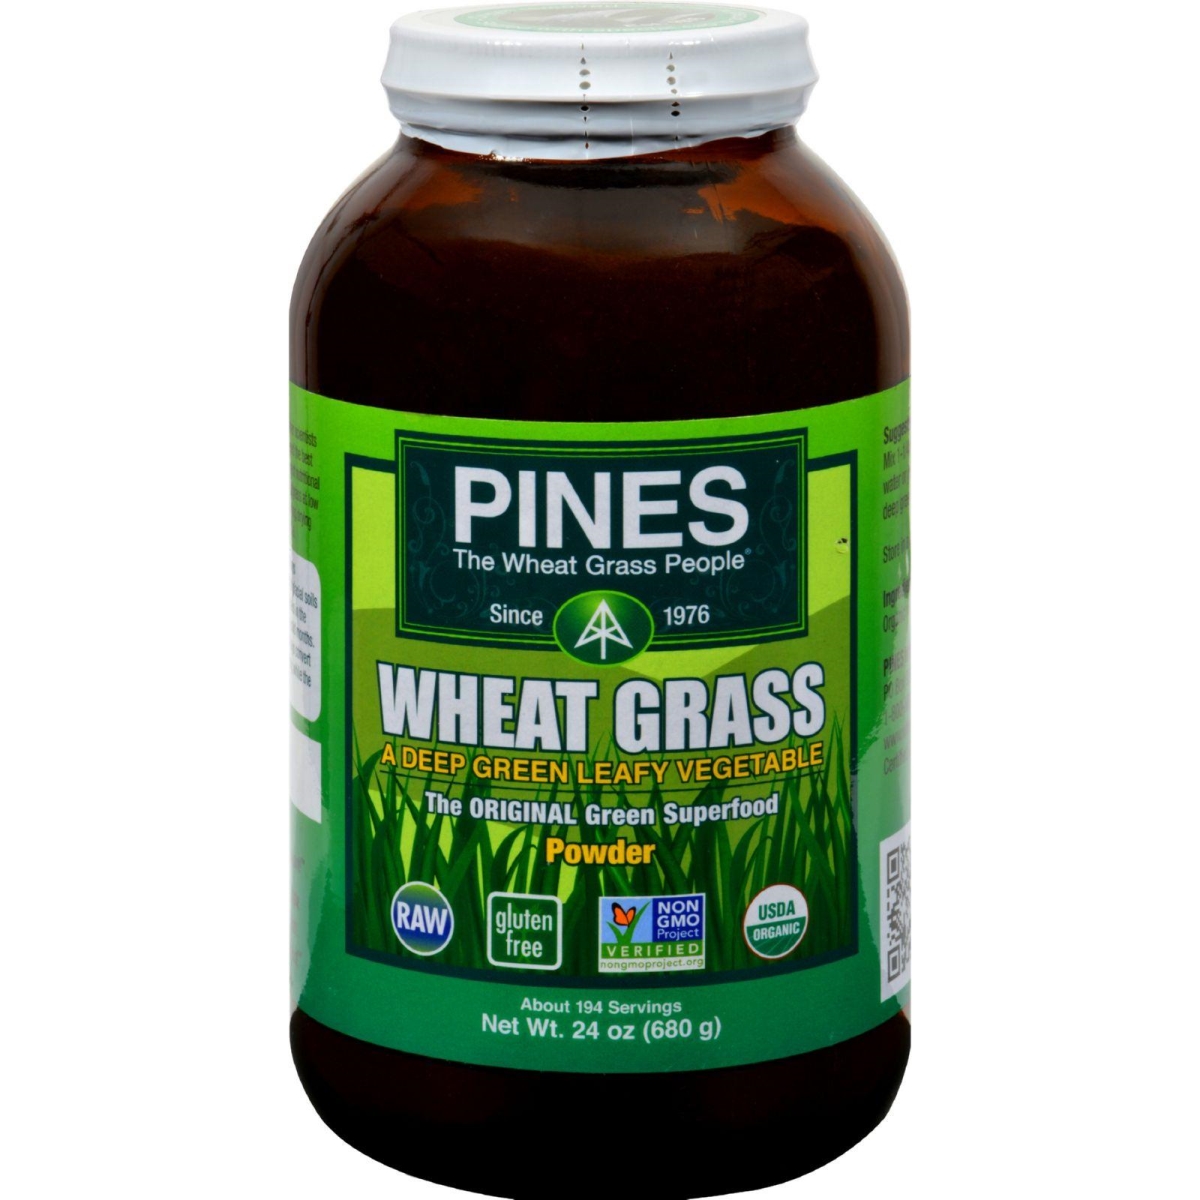 Hg0652099 24 Oz Wheat Grass Powder